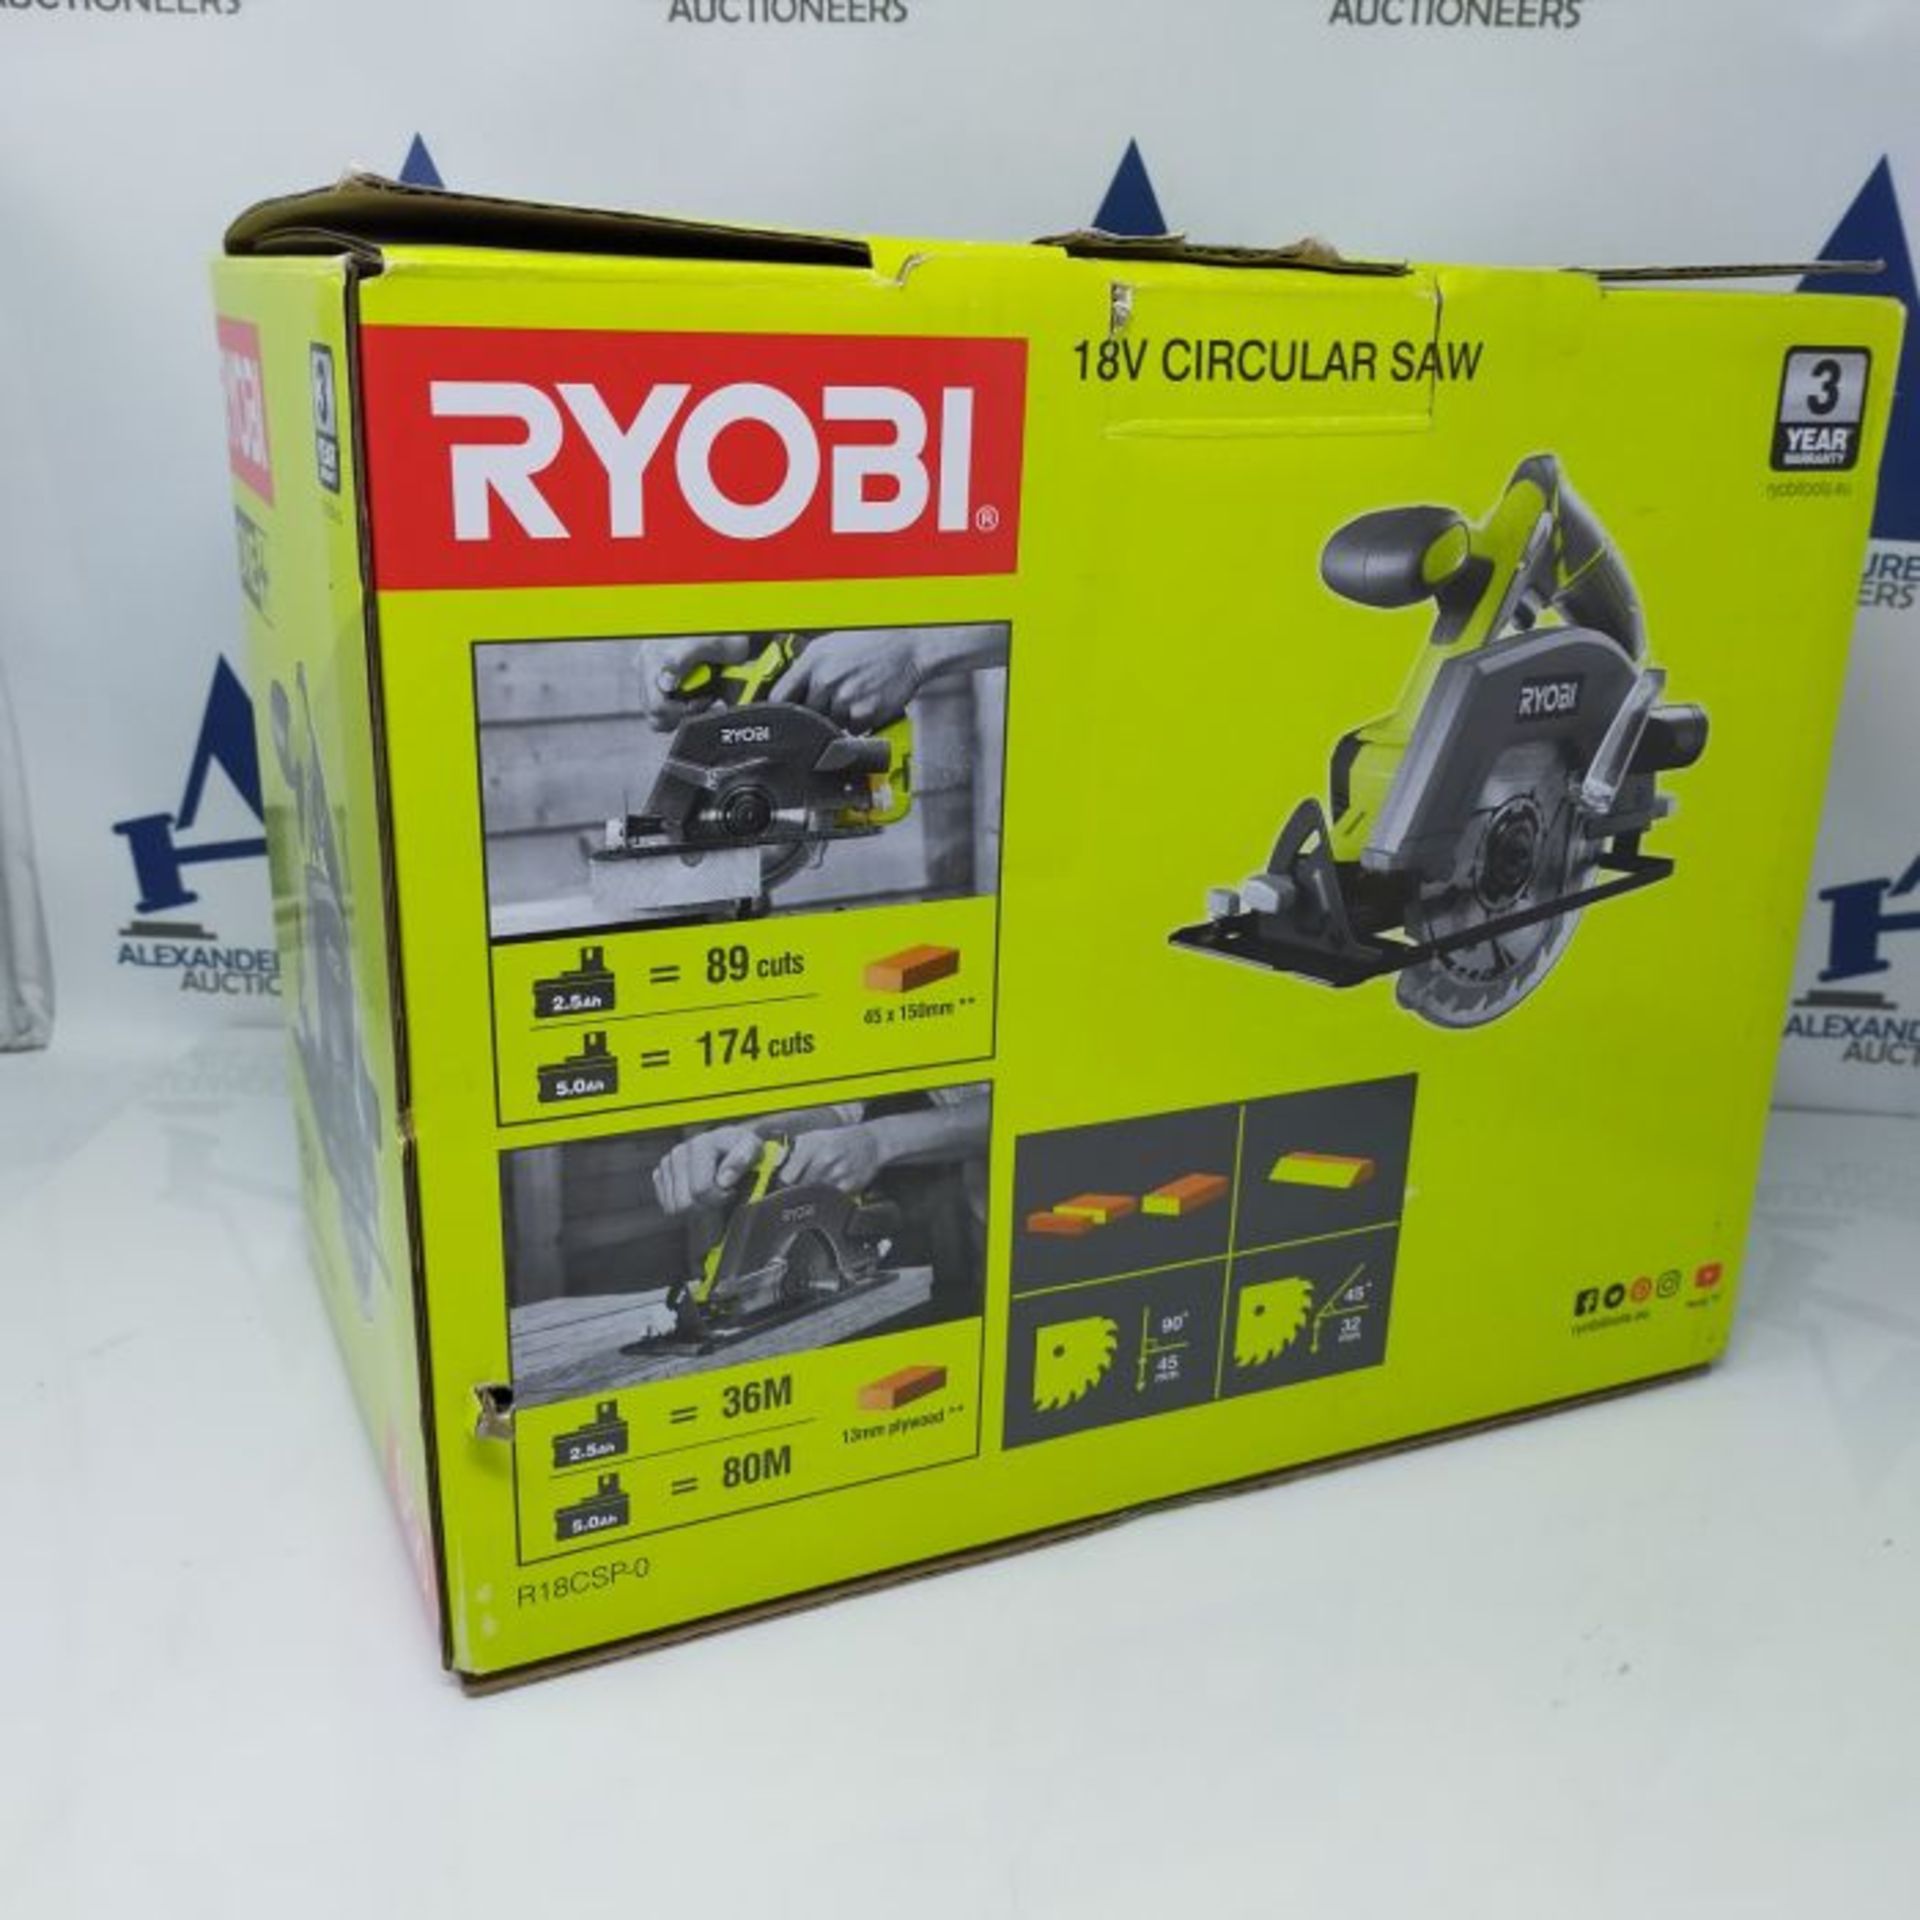 RRP£70.00 Ryobi R18CSP-0 18V ONE+ Cordless 150mm Circular Saw (Bare Tool), Yellow - Image 3 of 3